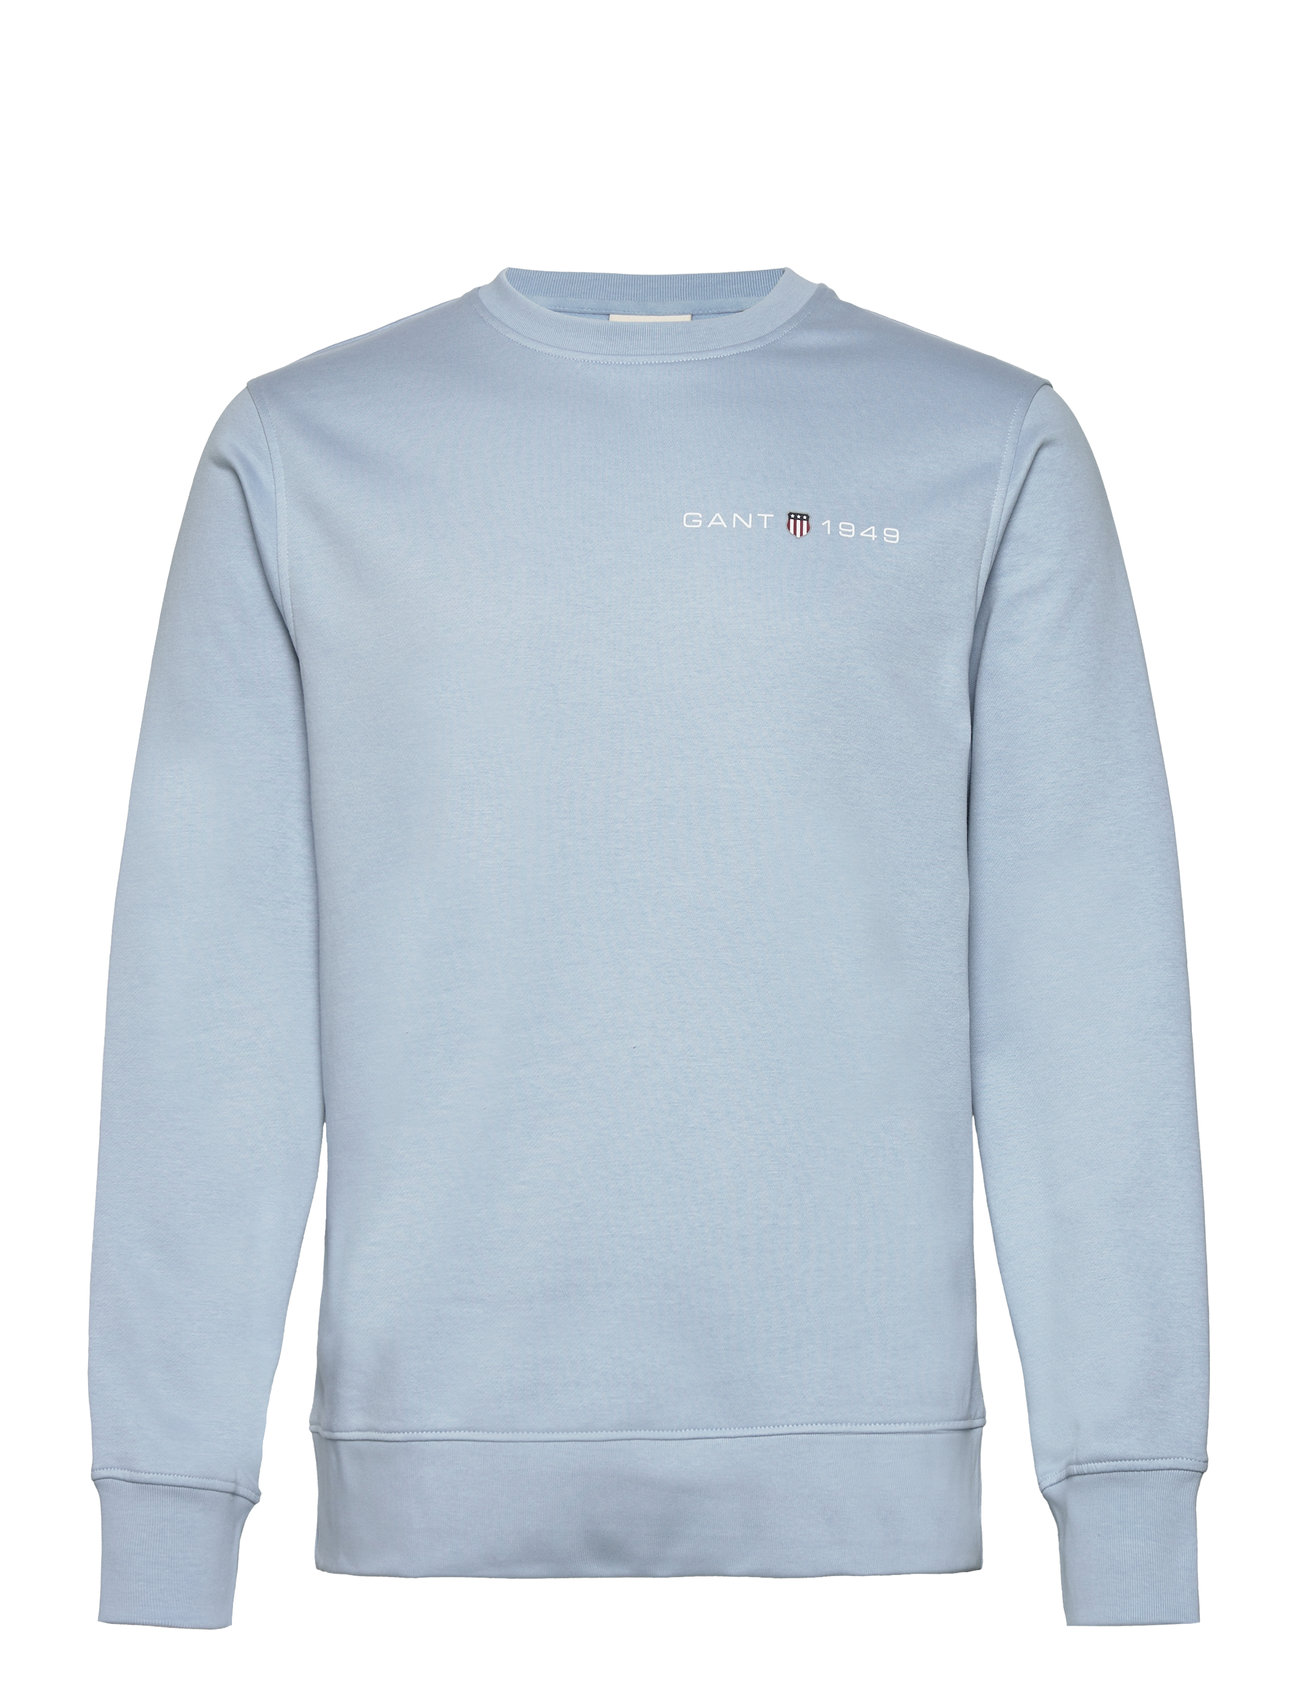 Printed Graphic C-Neck Sweat Tops Sweatshirts & Hoodies Sweatshirts Blue GANT